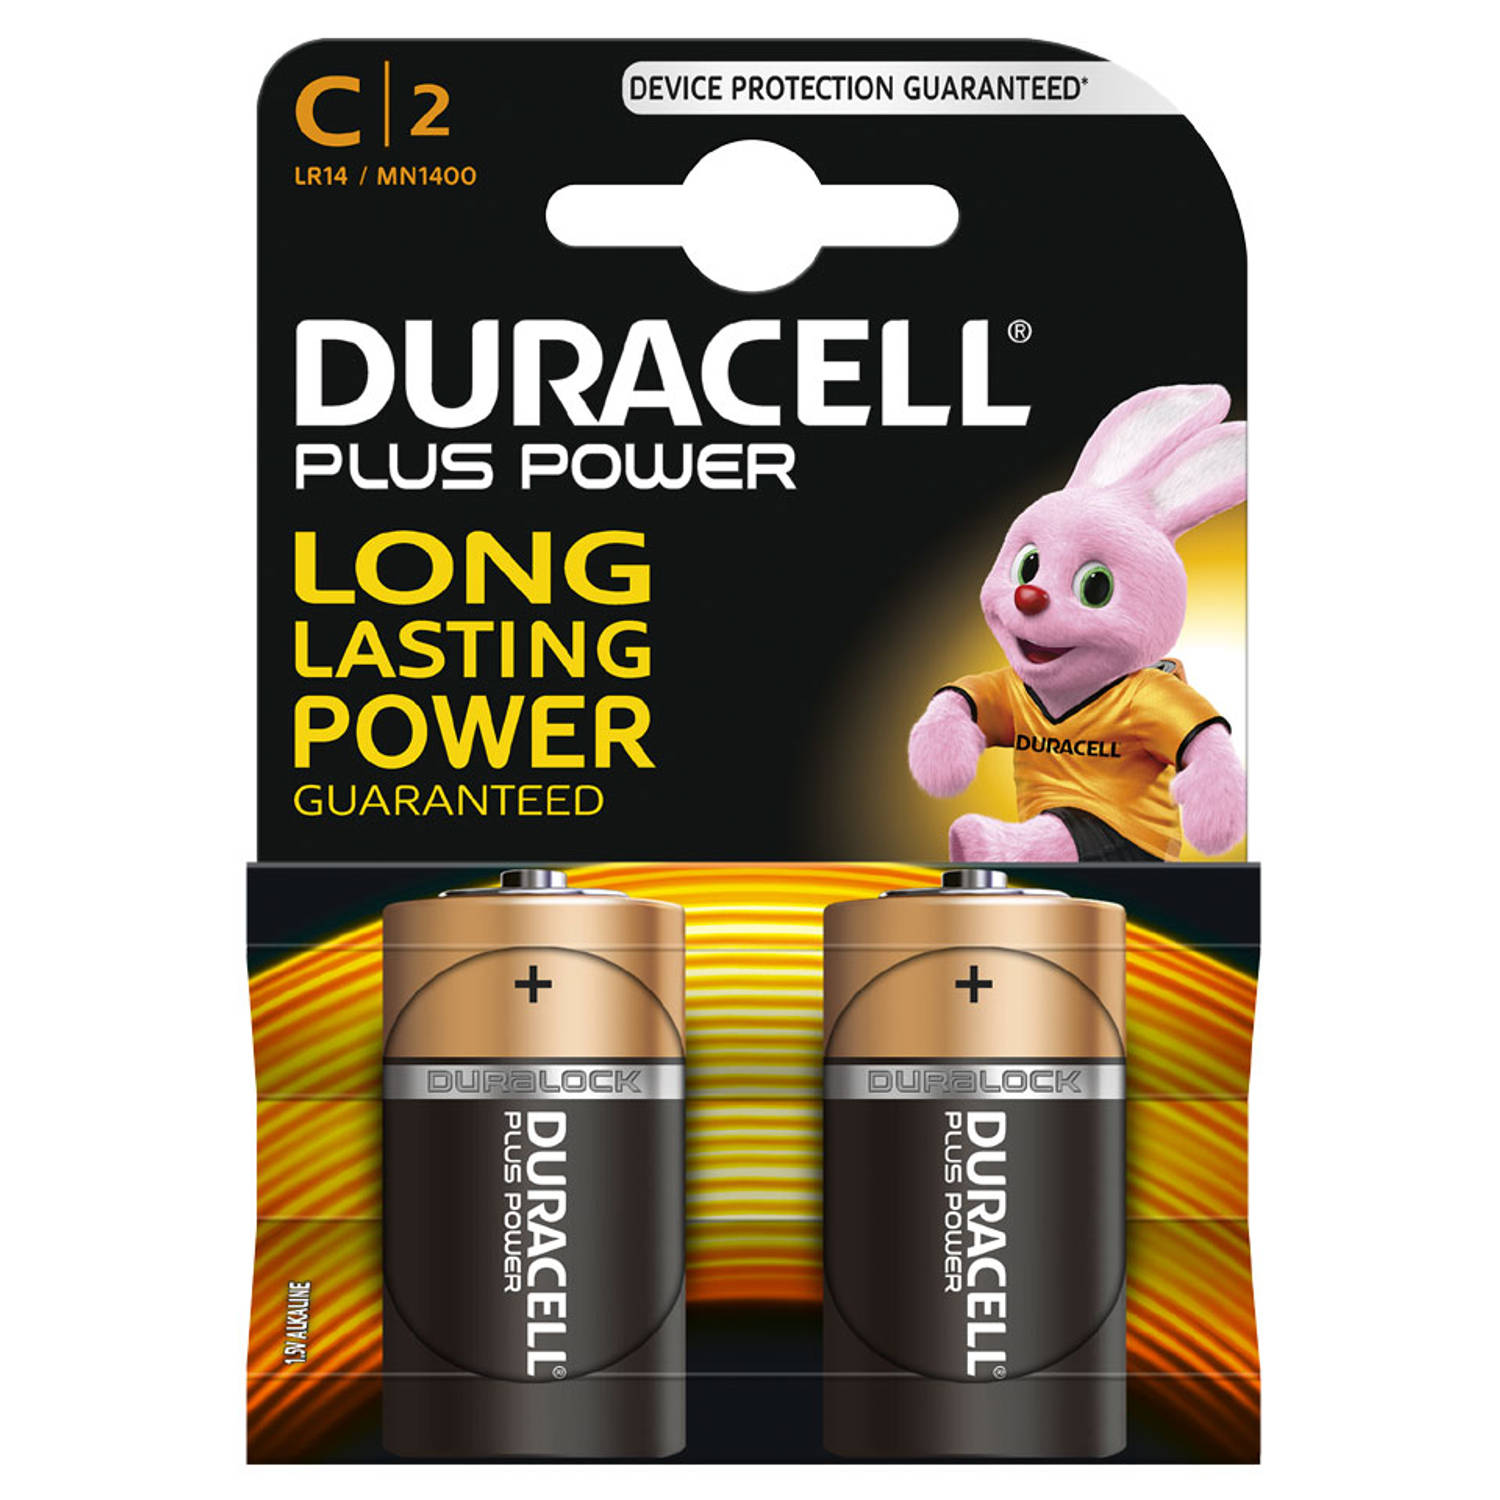 Spanje Componeren Glad Duracell Plus Power C alkaline batterijen - 2 stuks | Blokker